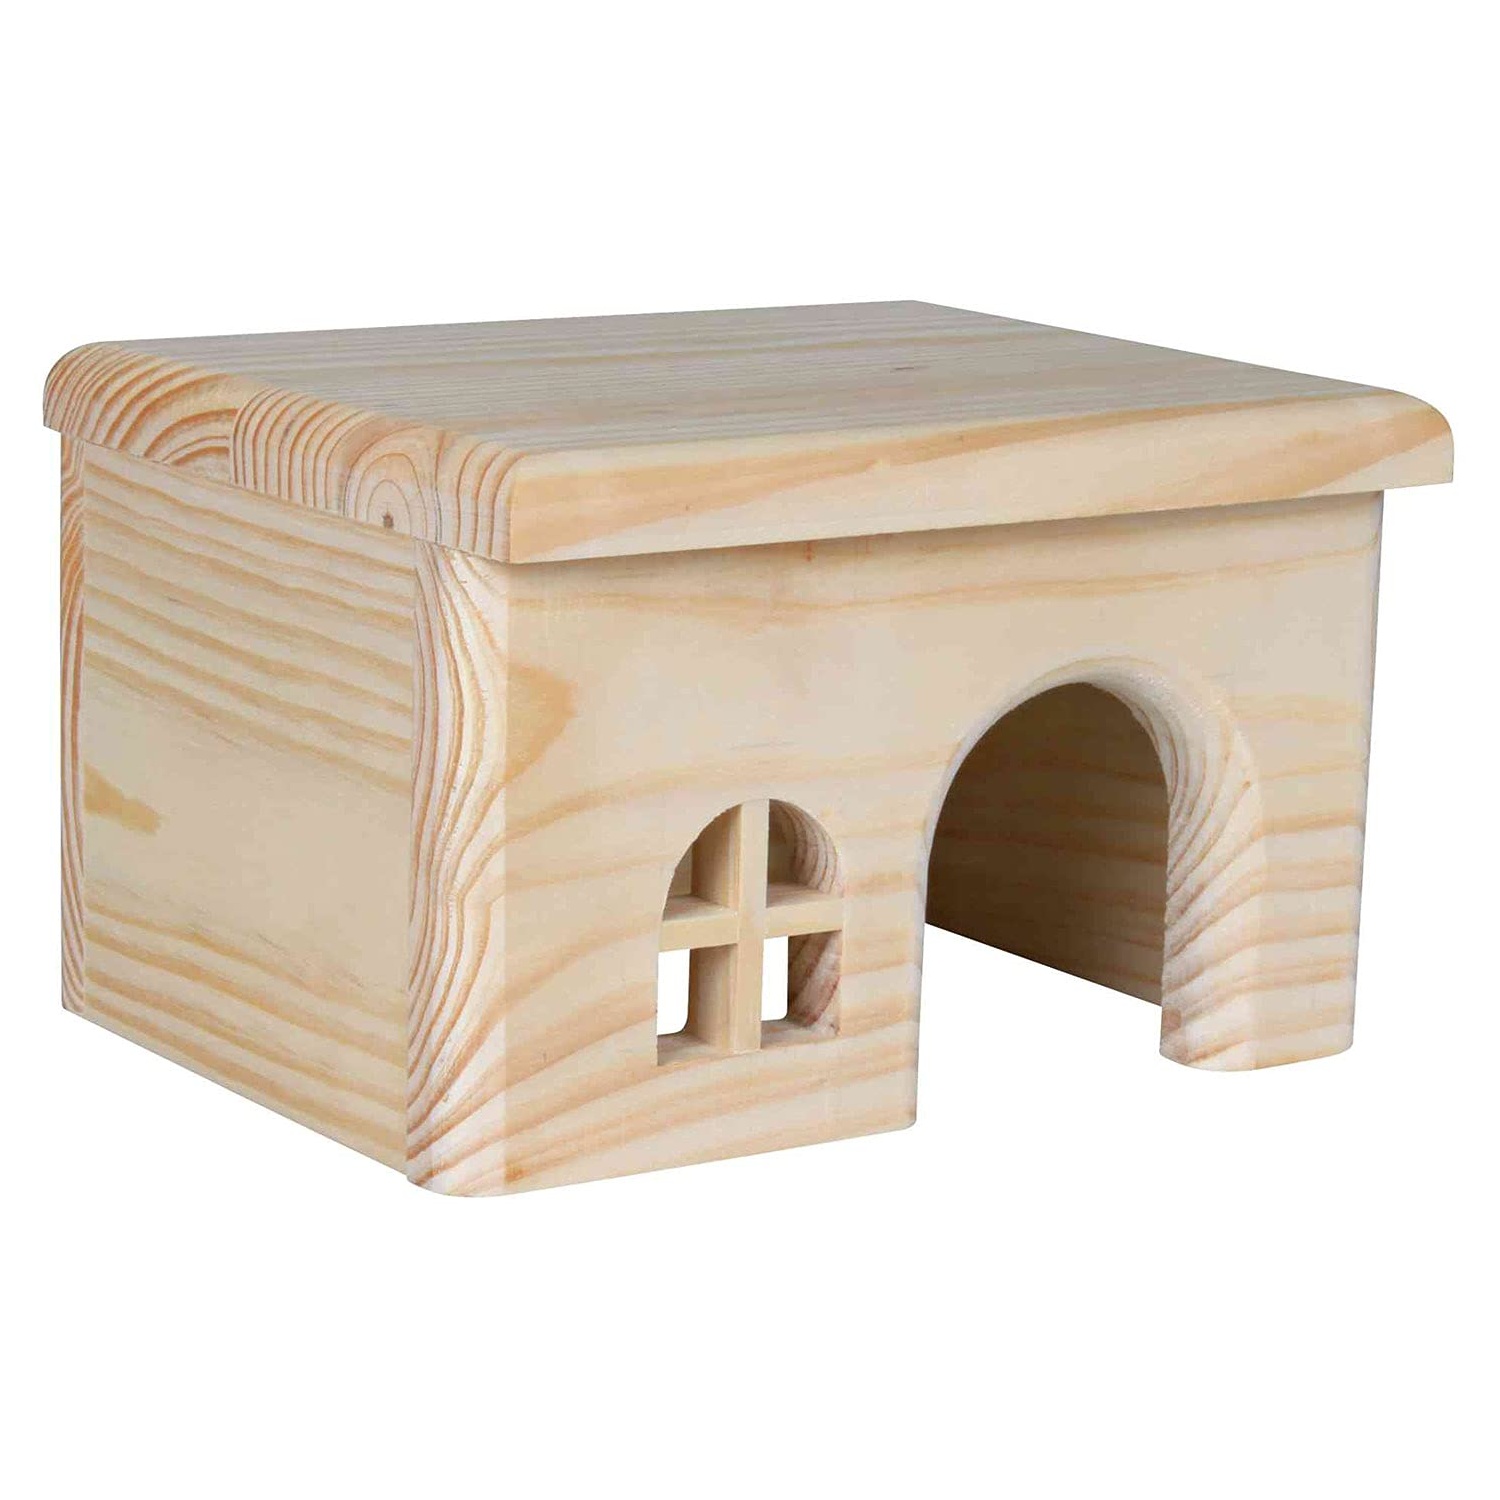 Bild House nail-free hamsters wood 15 × 12 × 15 cm